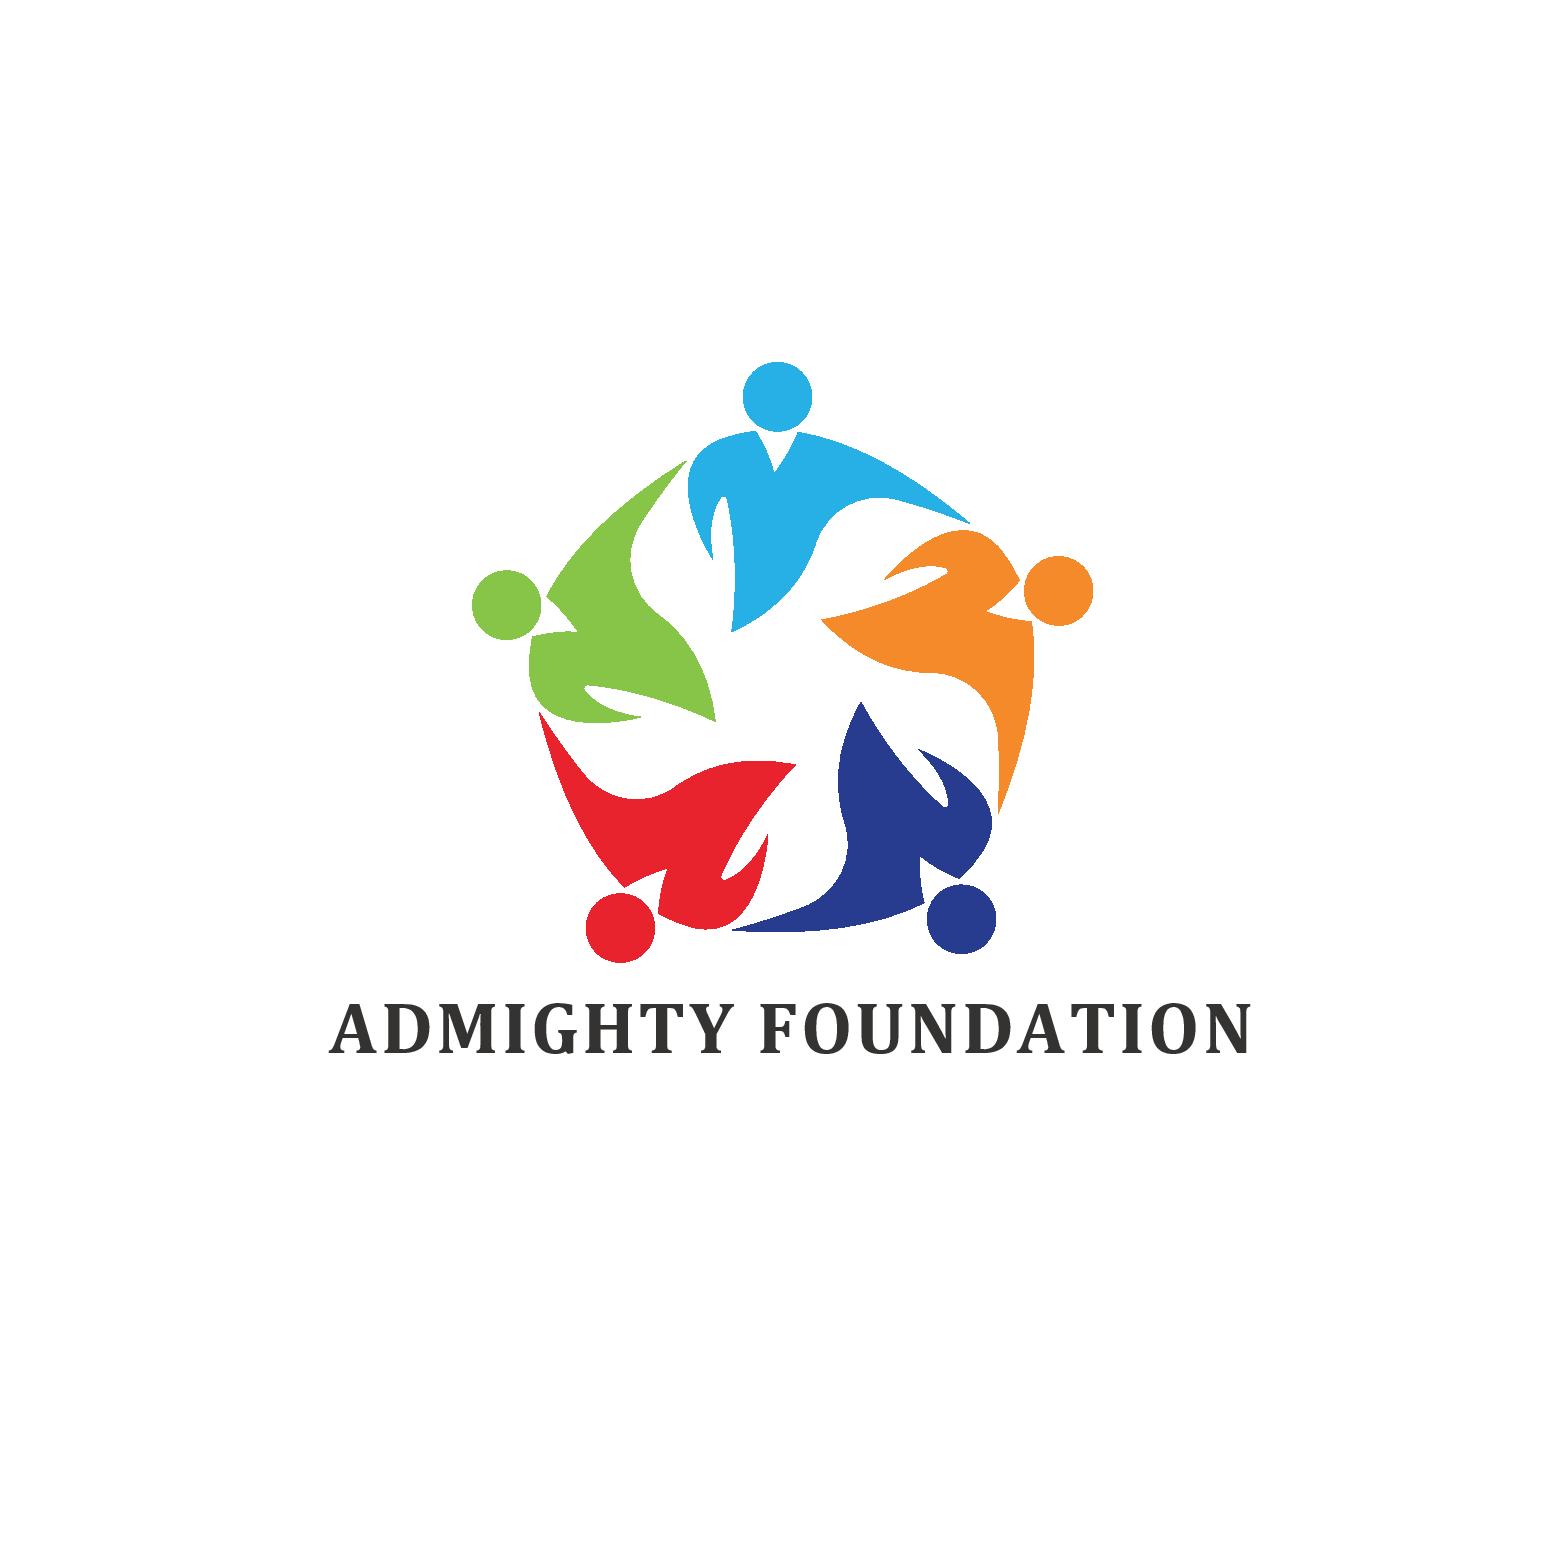 Admighty Foundation logo